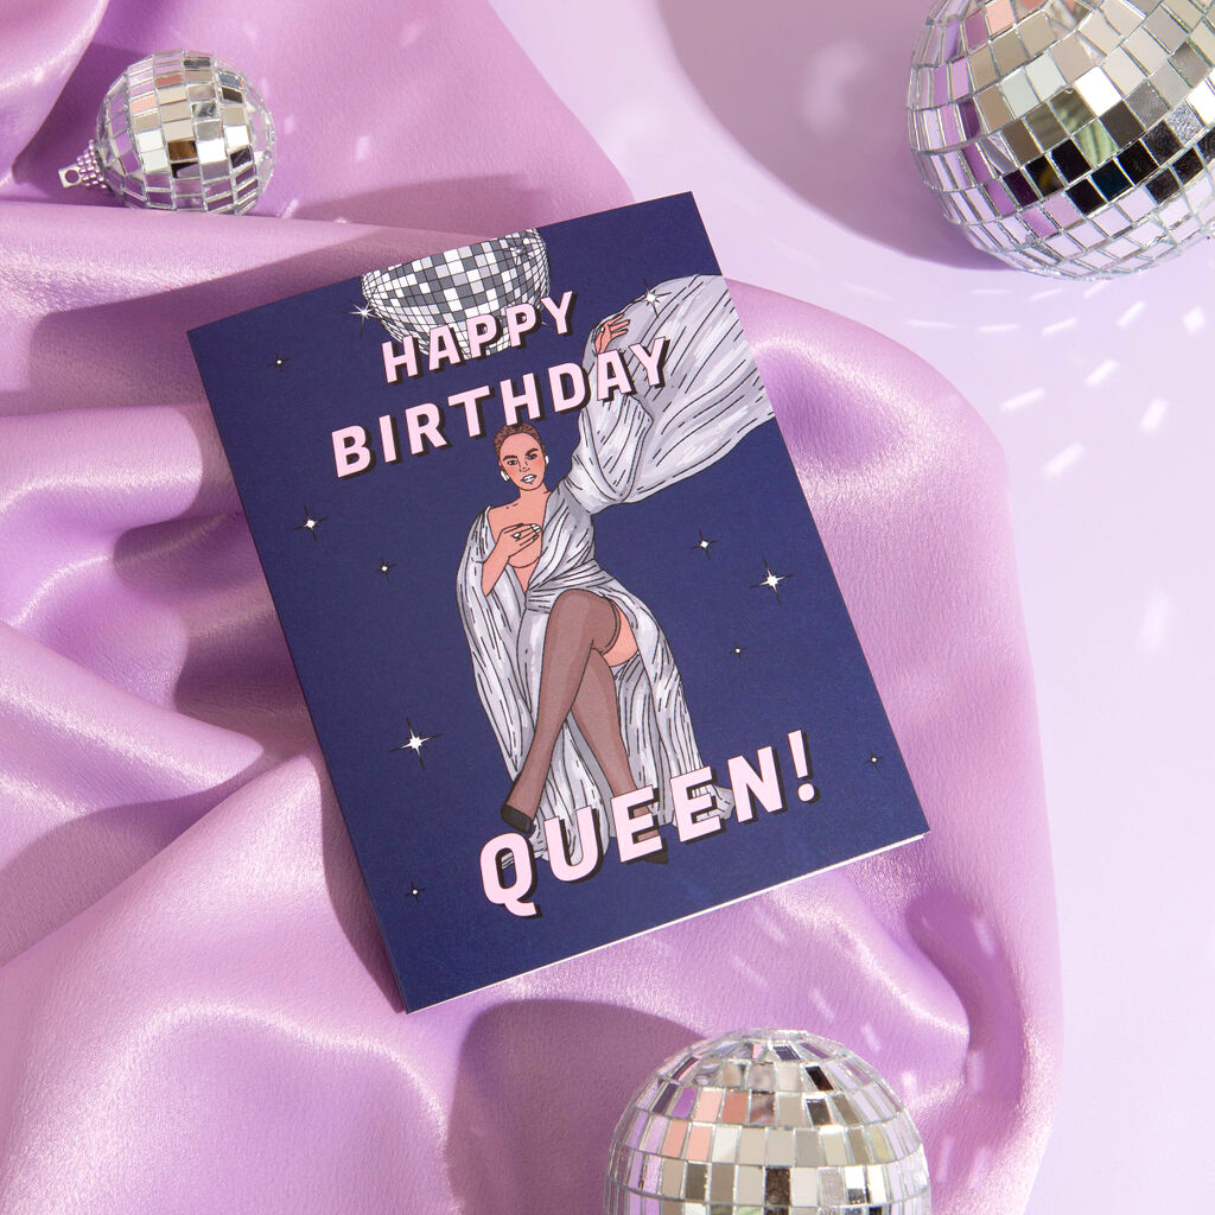 Happy Birthday Queen! Card